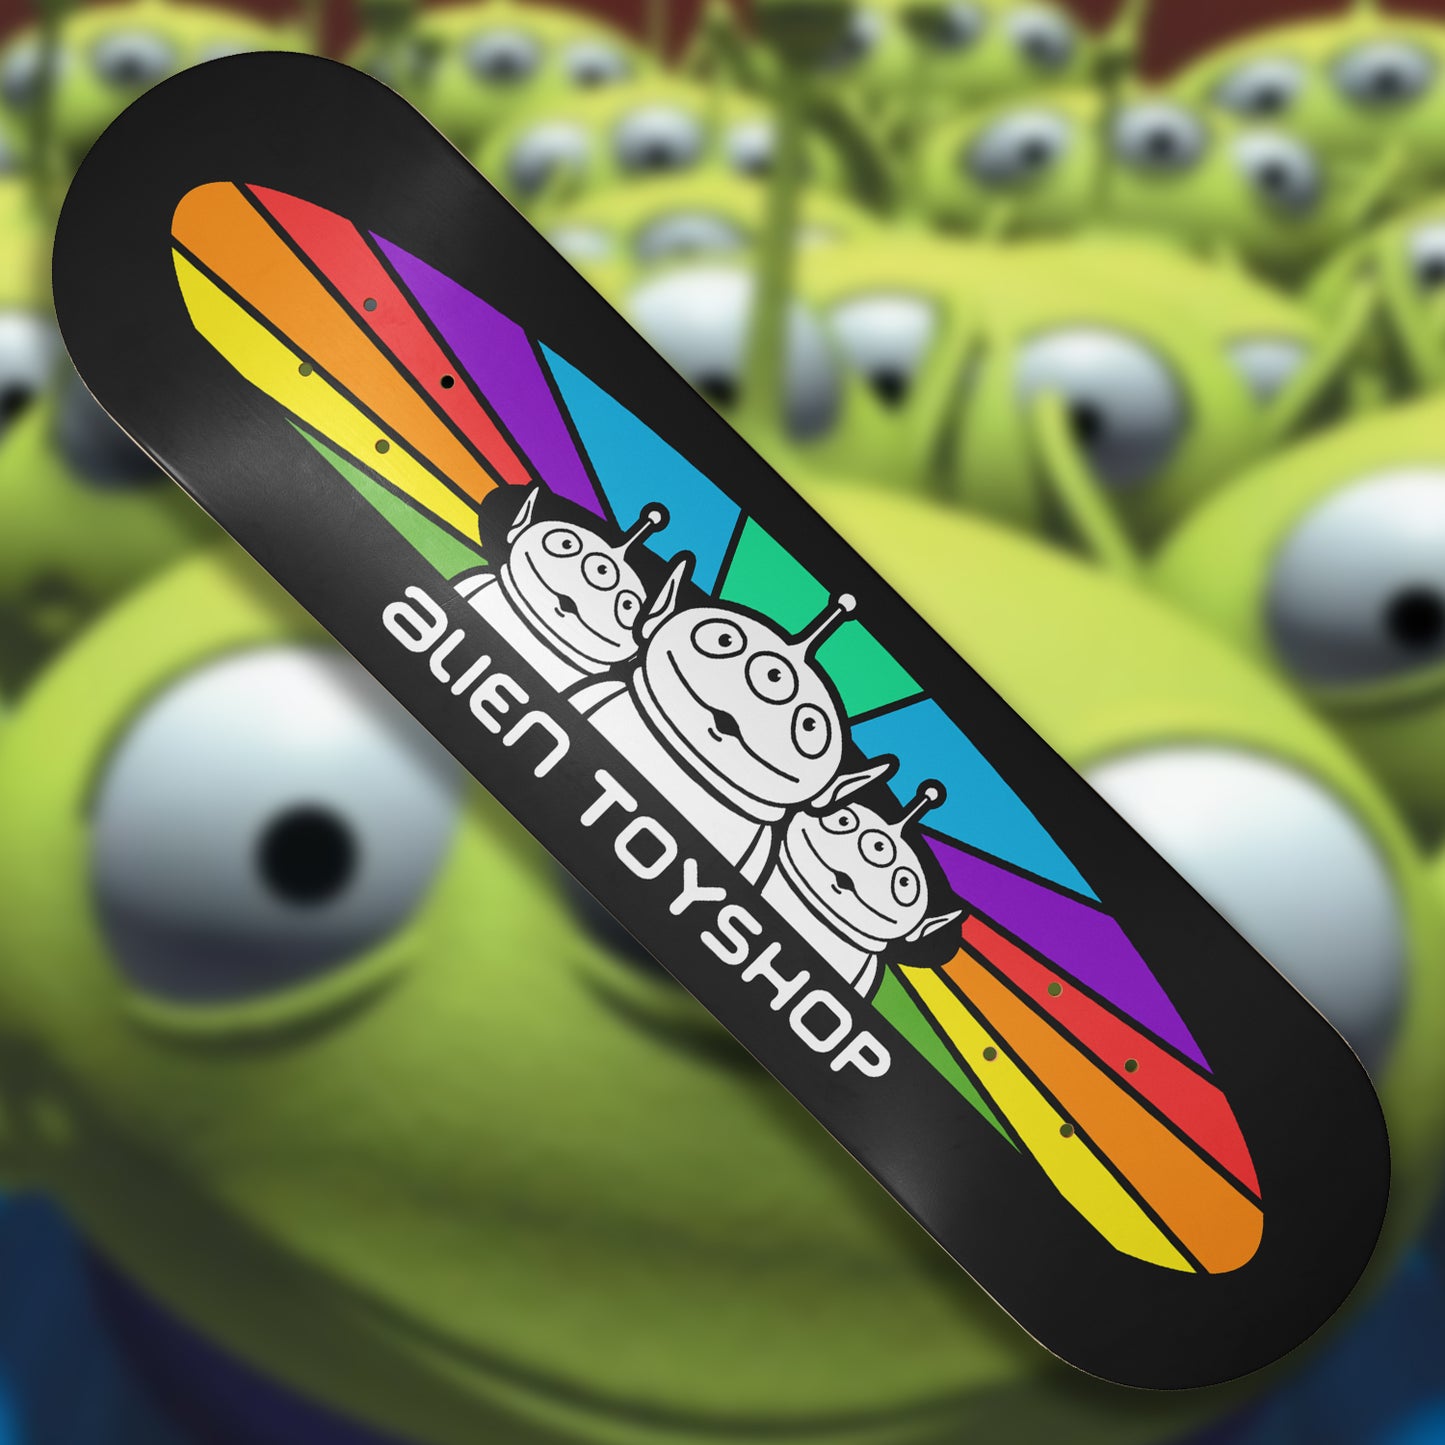 Alien Toyshop skate deck